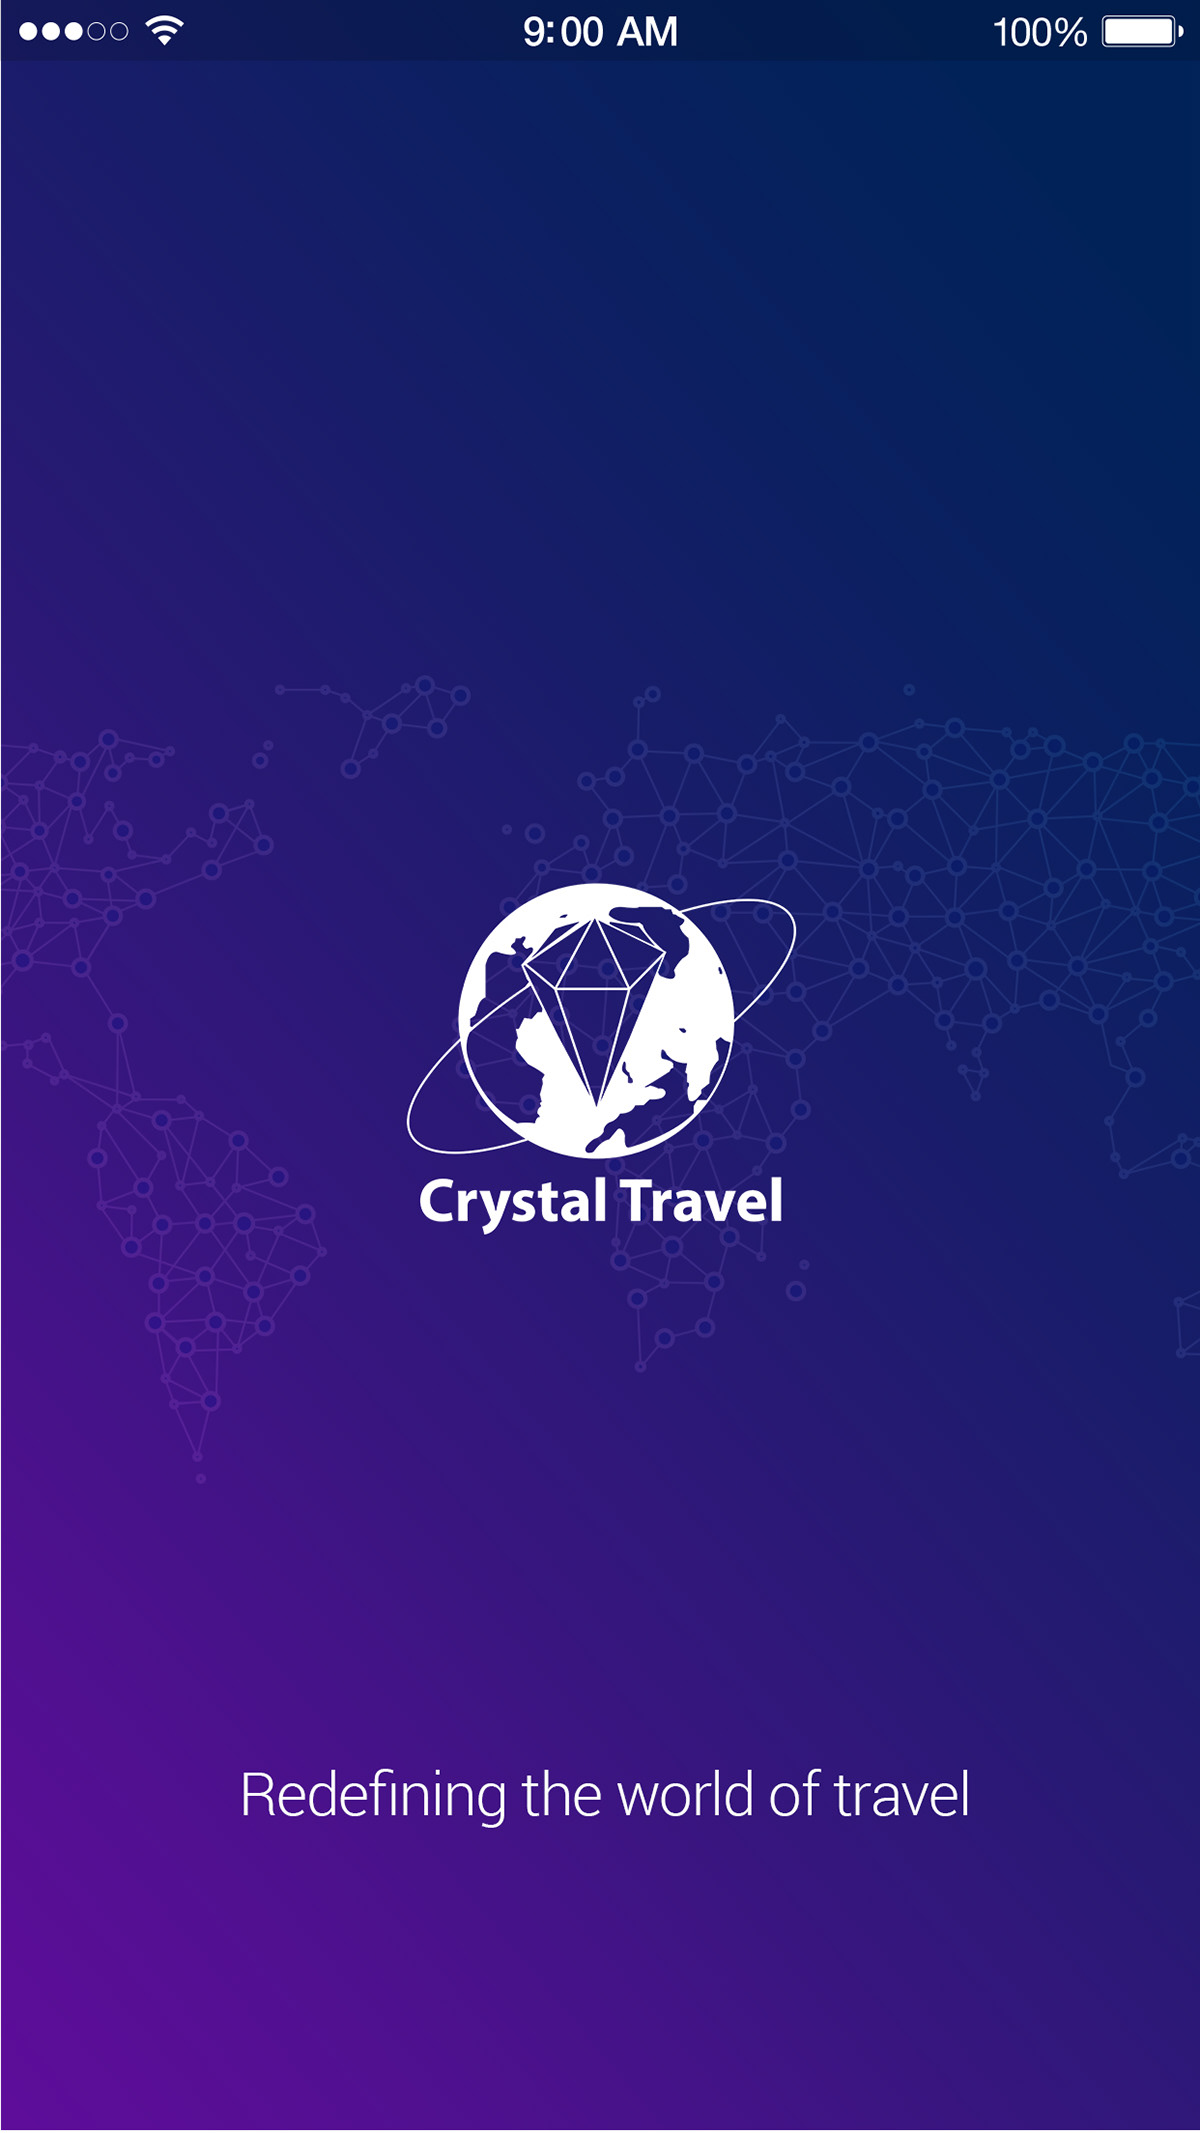 crystal travel phone number